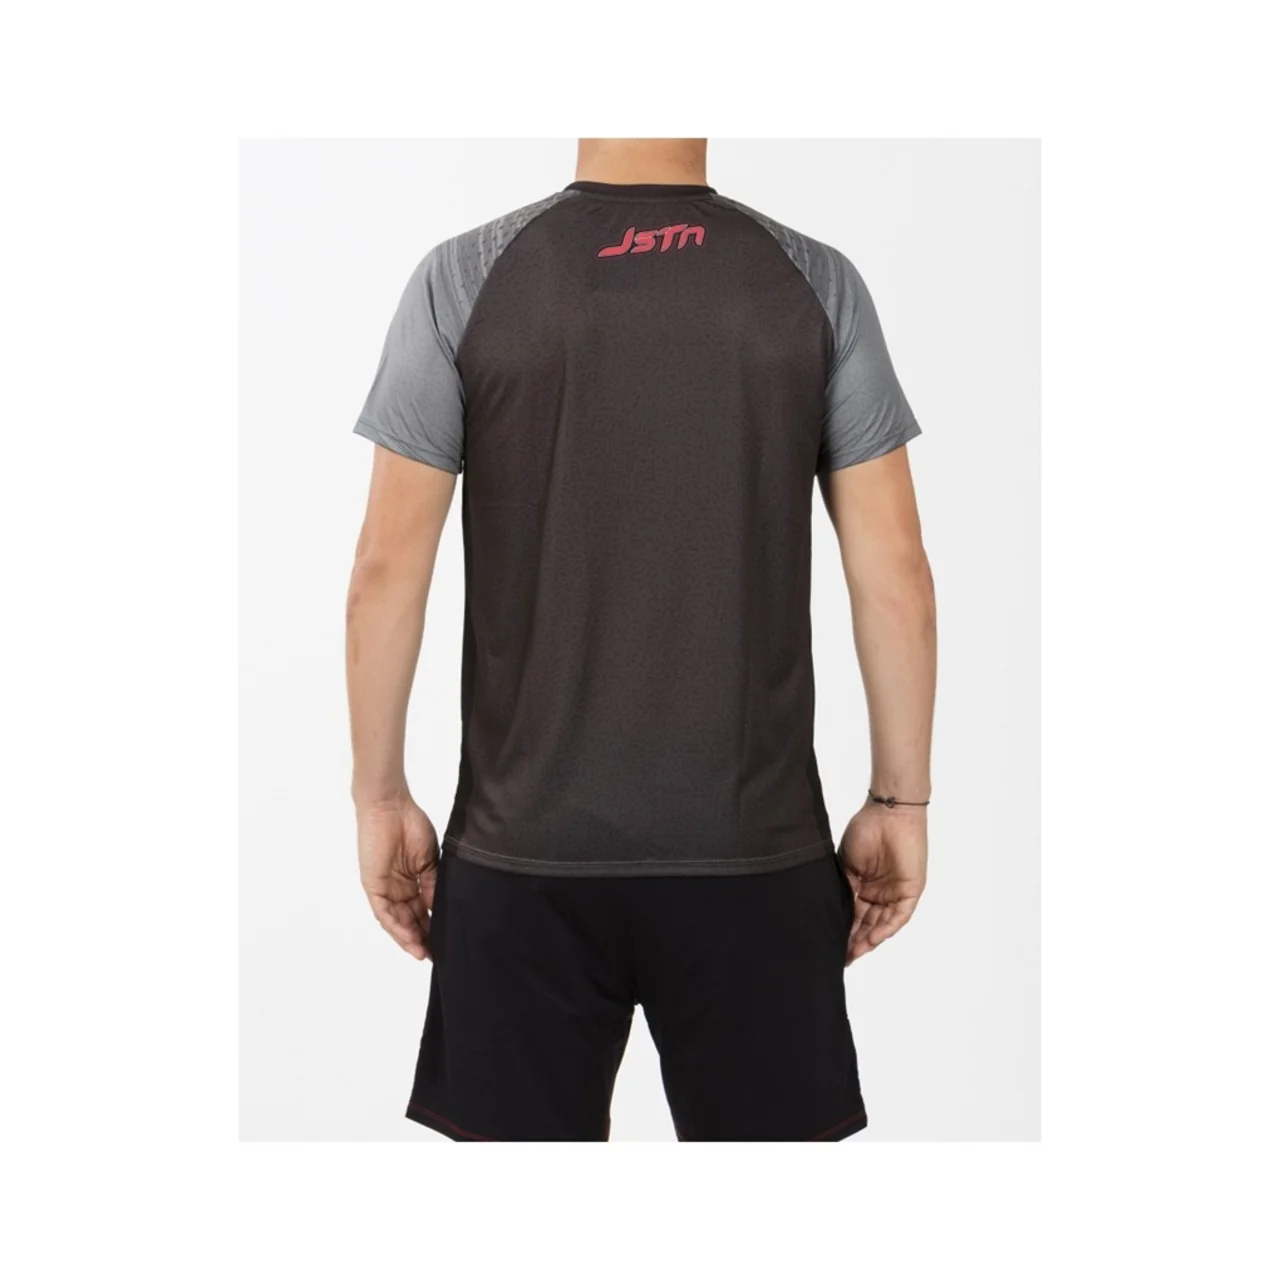 Just Ten Kay Anthracite T-Shirt Size XXL